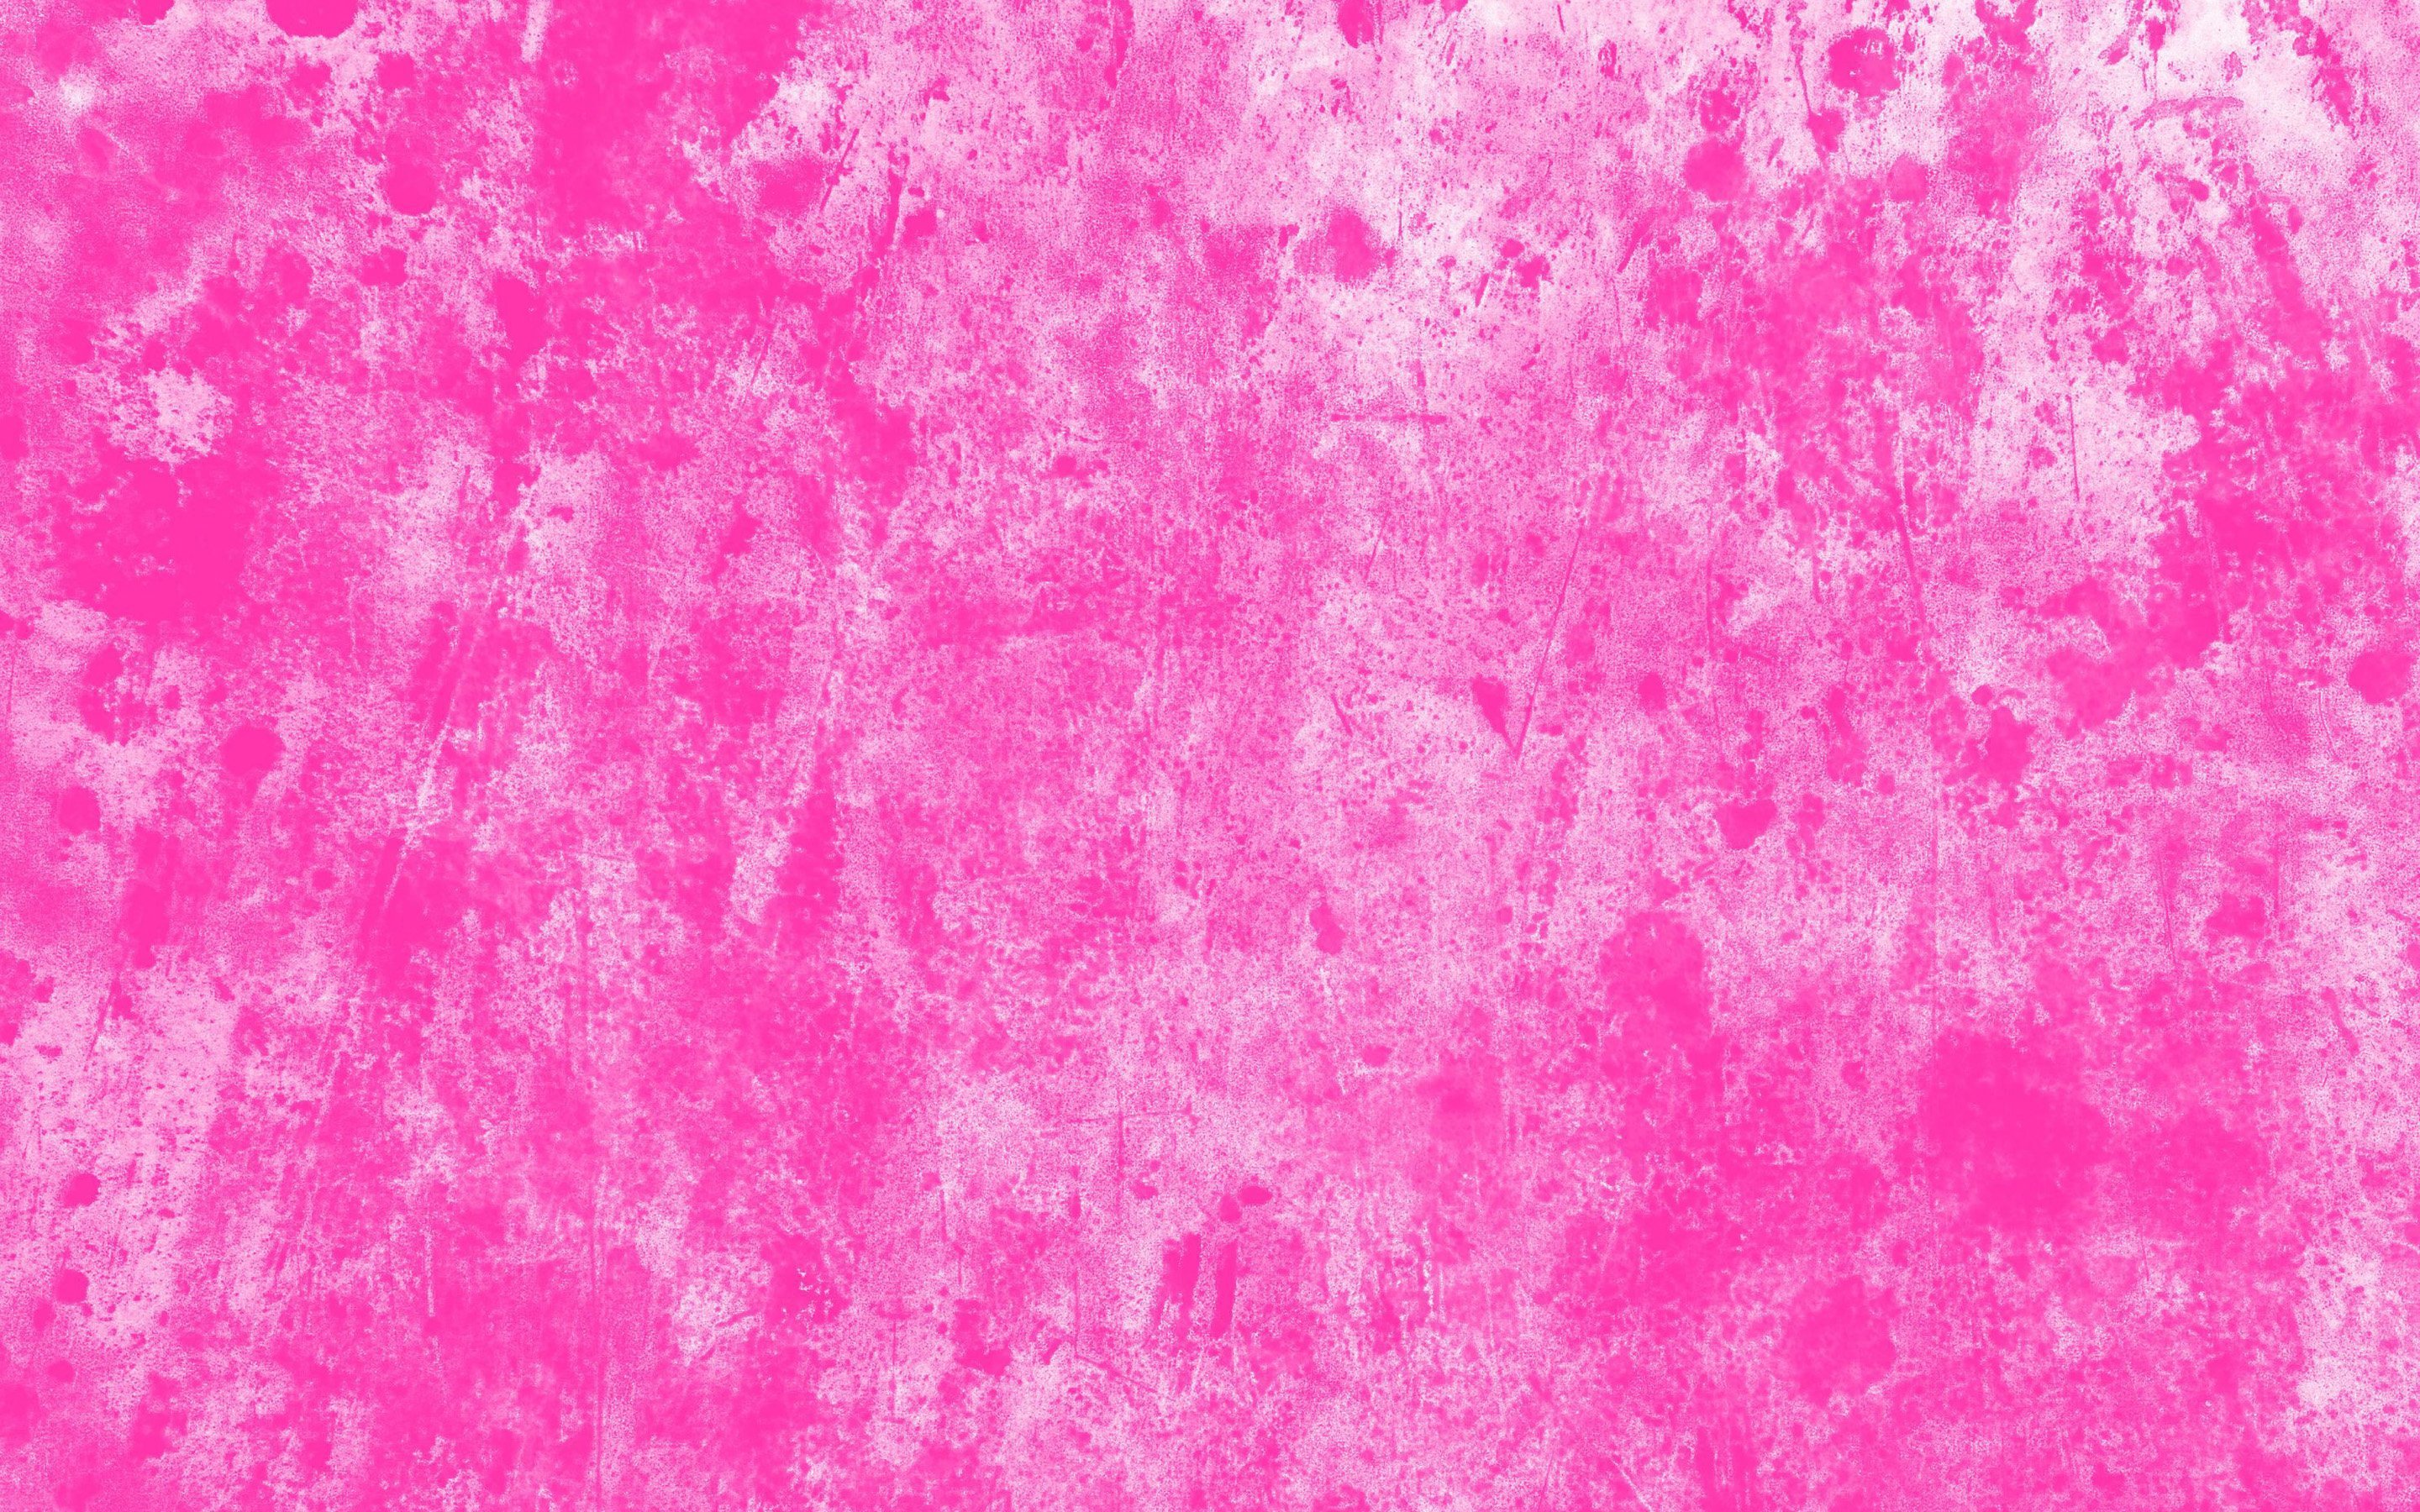 Download wallpapers pink grunge texture, creative grunge background ...